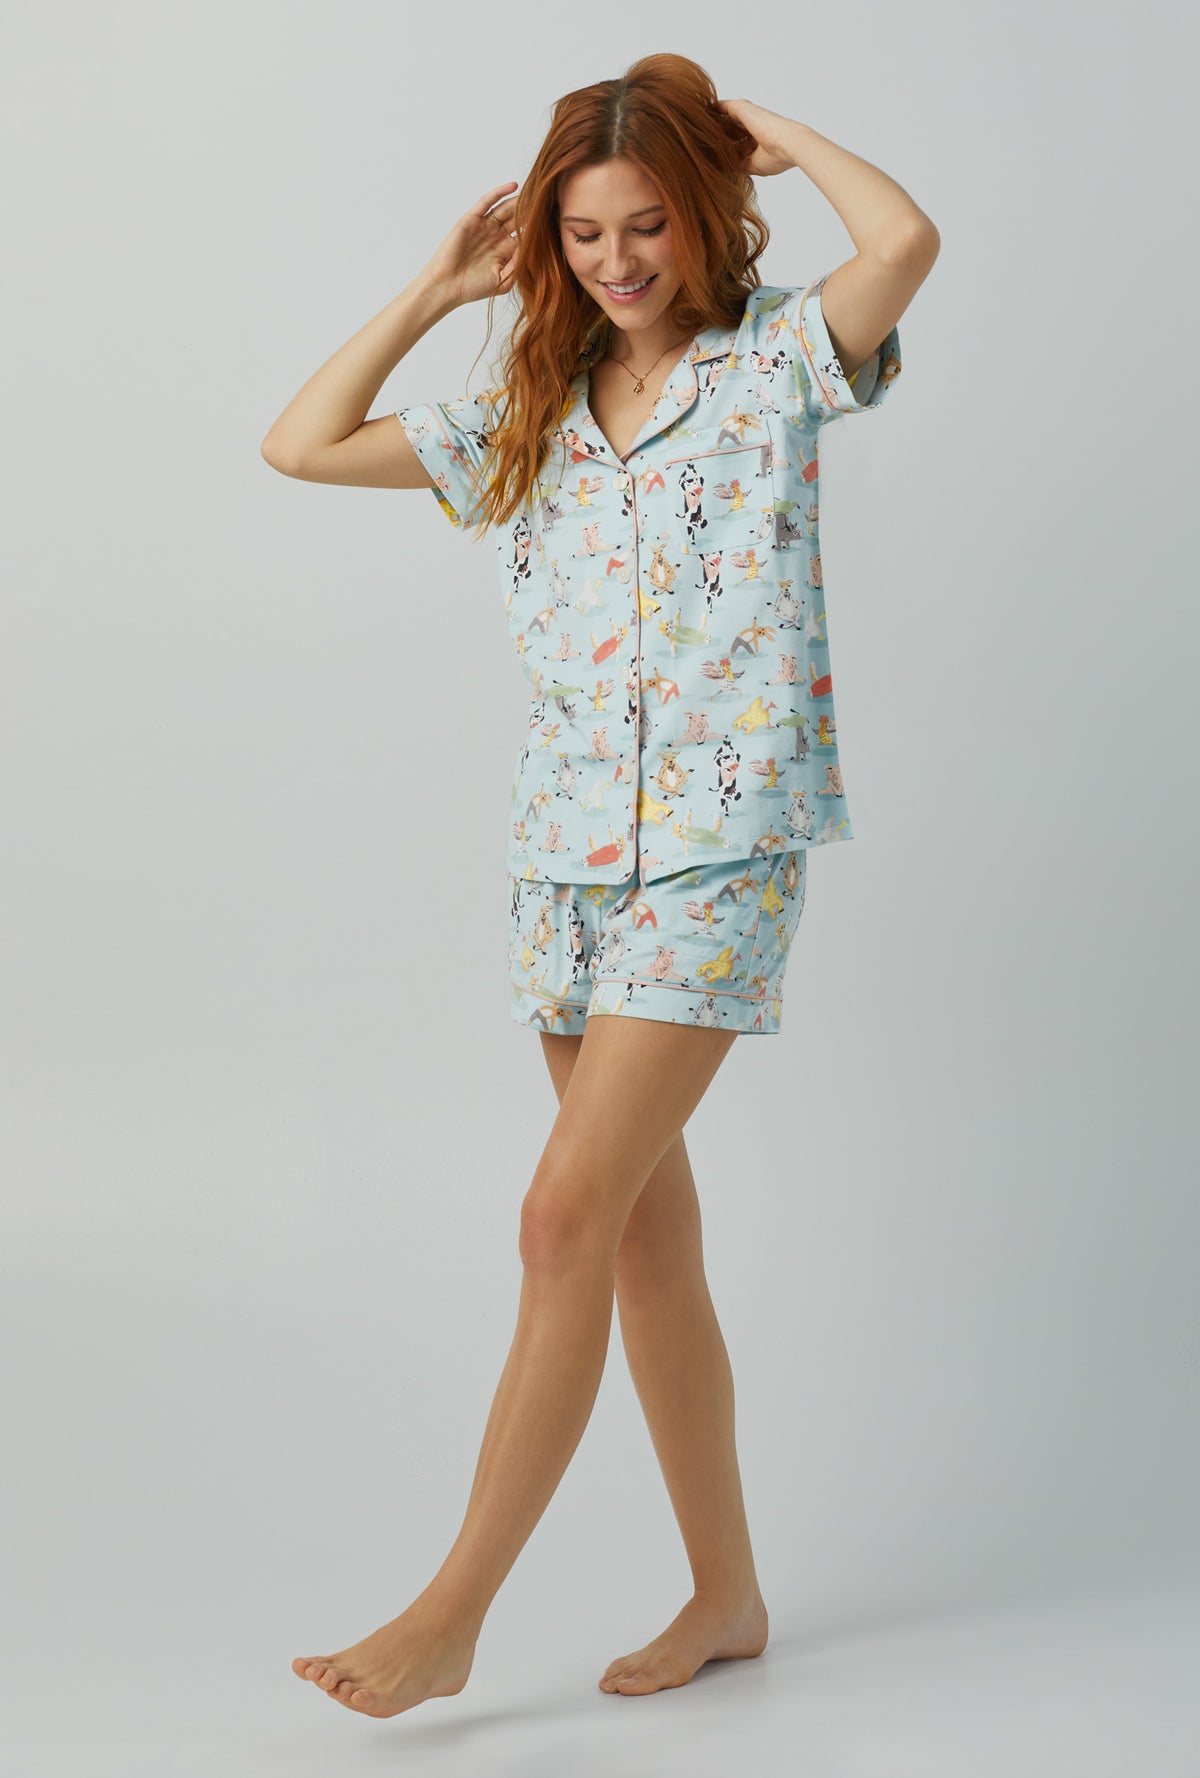 A lady wearing Short Sleeve Classic Shorty Stretch Jersey PJ Set with barnyard retreat print